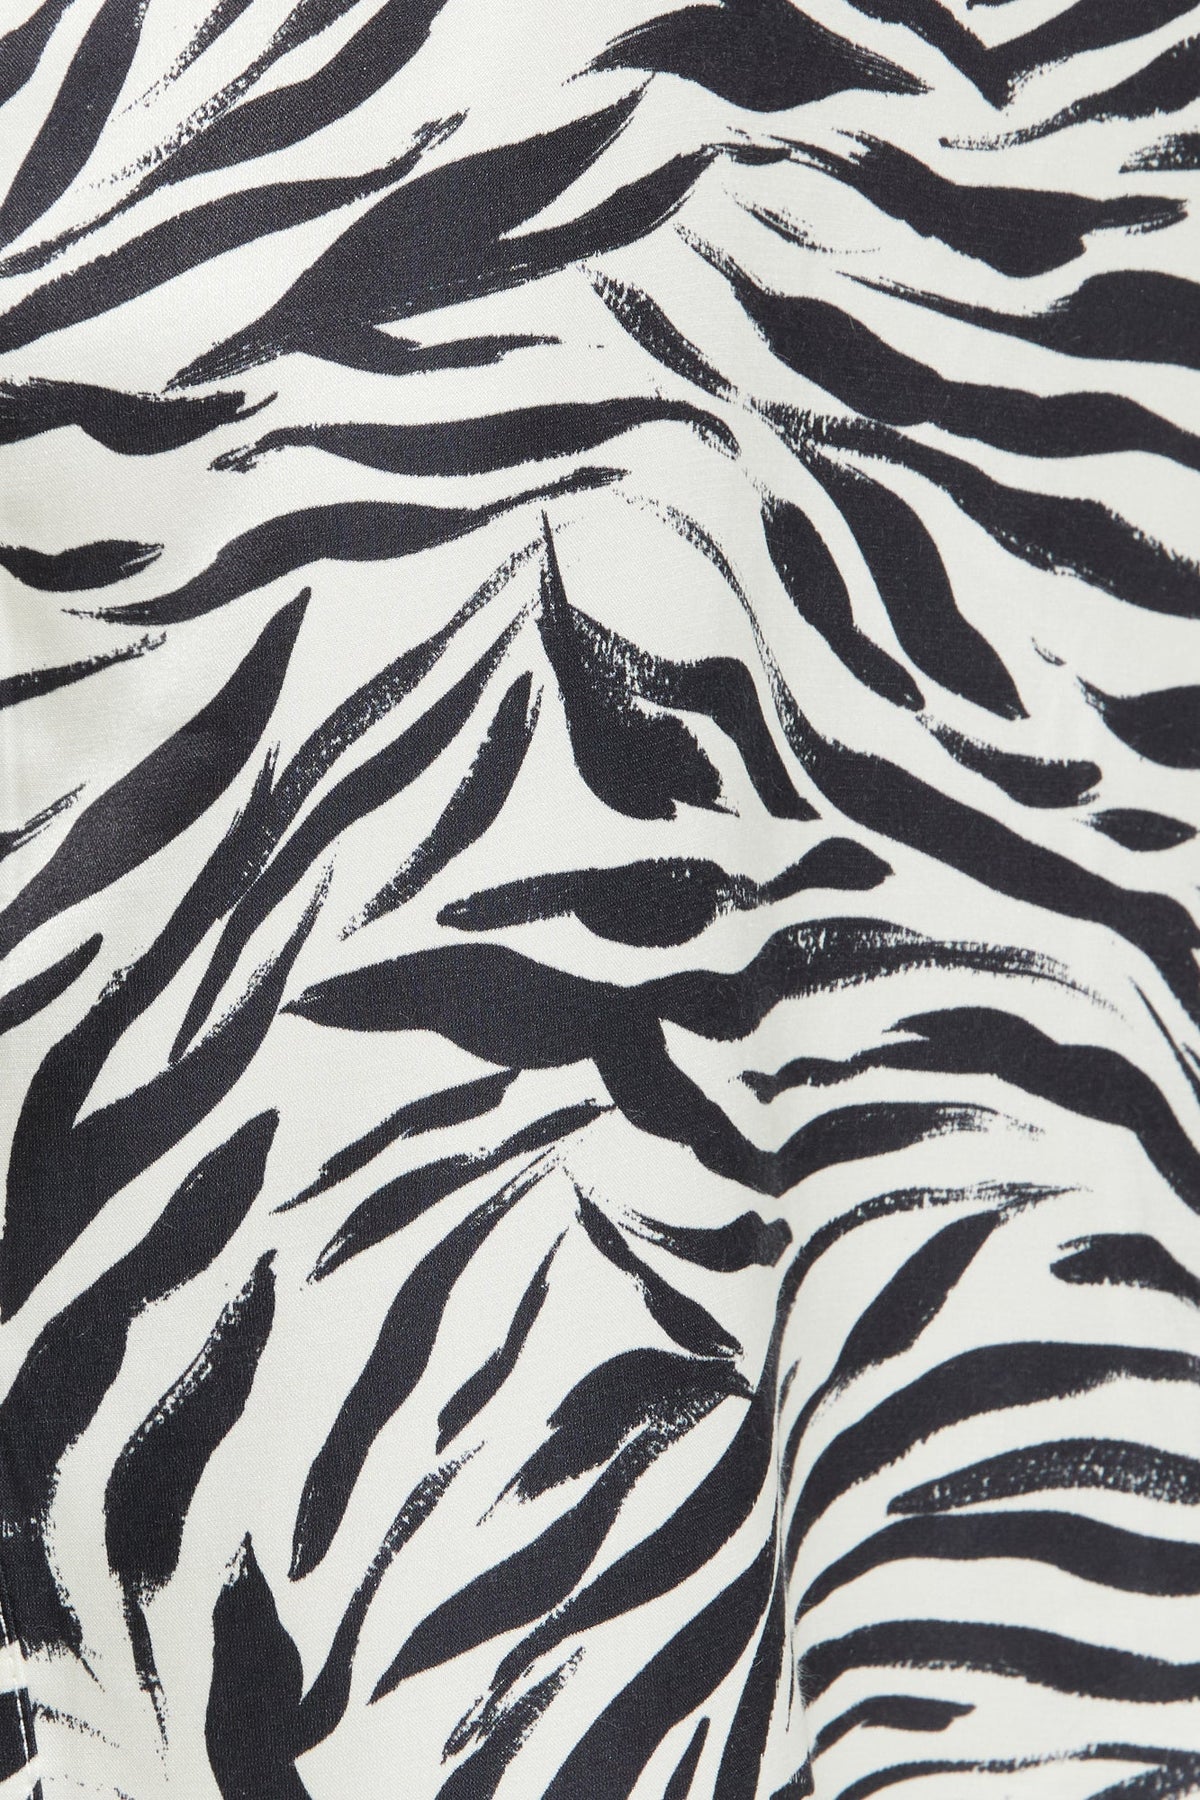 The Zafina Shirt in Brush Zebra Print by Ginia